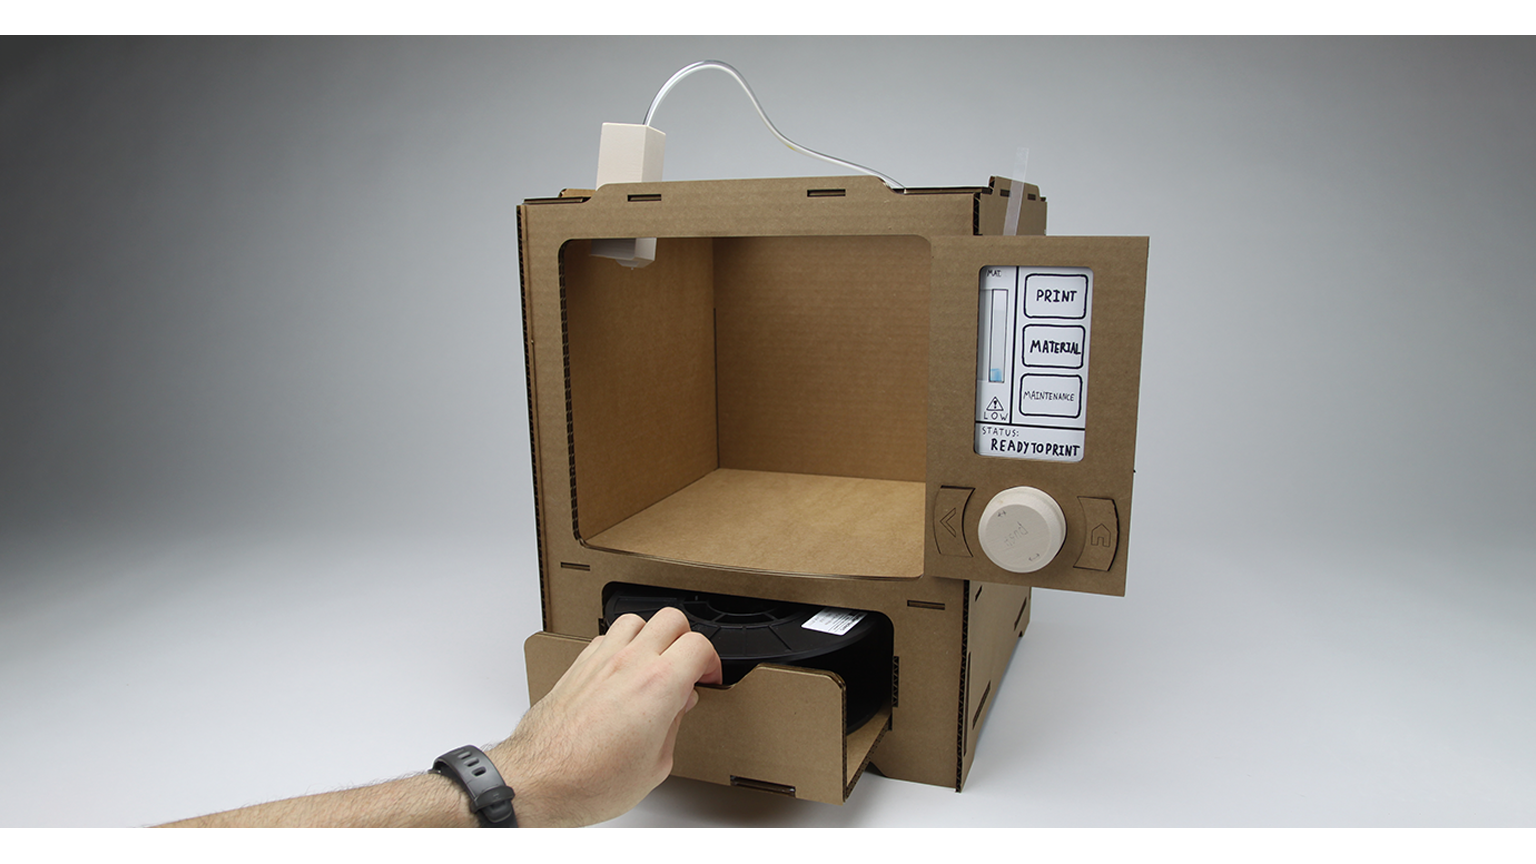 Cardboard model of a 3D printer